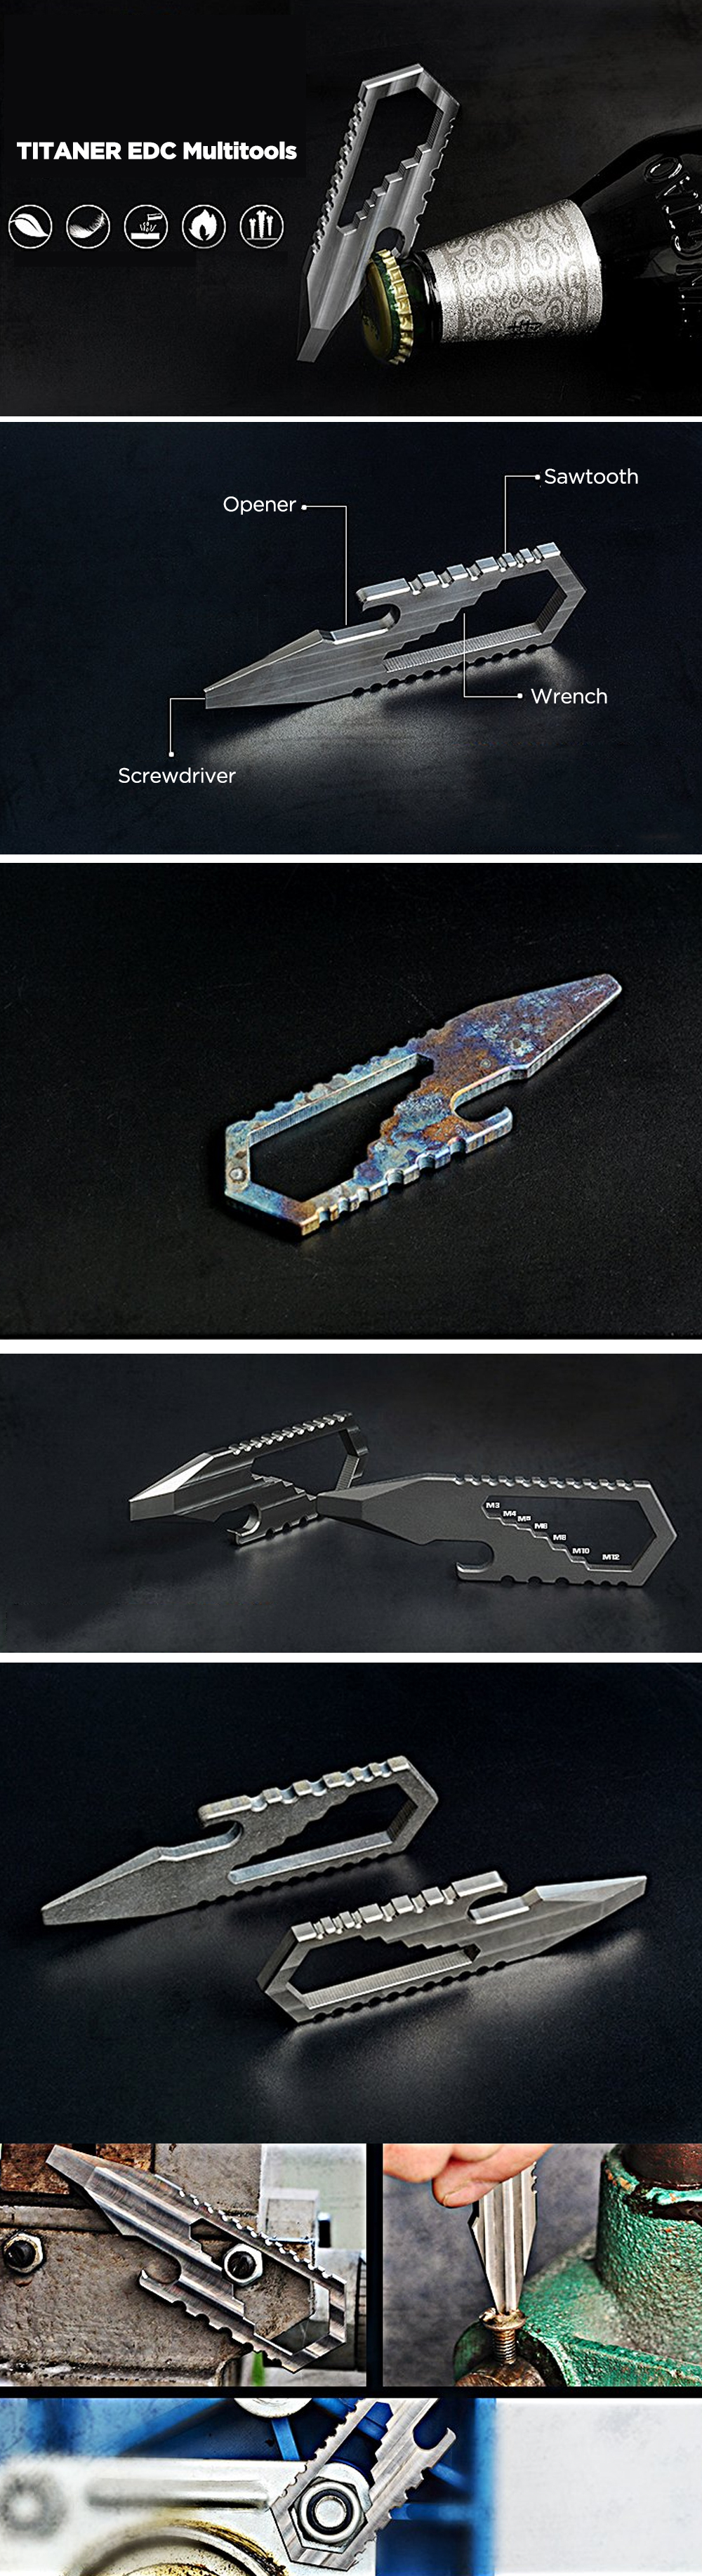 TITANER-4-in-1-EDC-Mini-Multitools-Pocket-Keychain-Wrench-Slotted-Screwdriver-Bottle-Opener-Portable-1795741-1